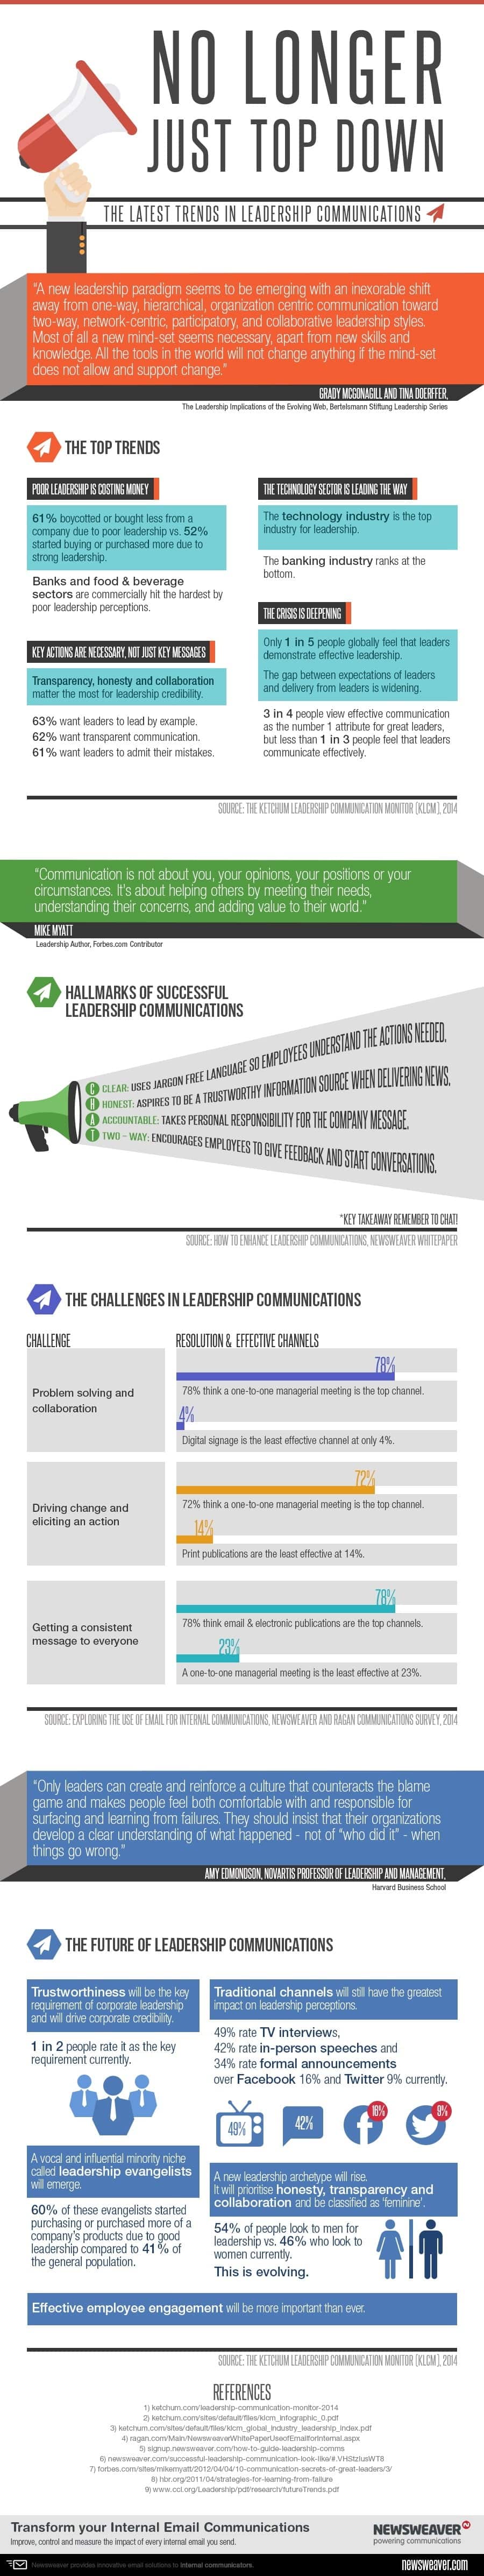 Newsweaver-IG-Leadership-Communications-Infographic